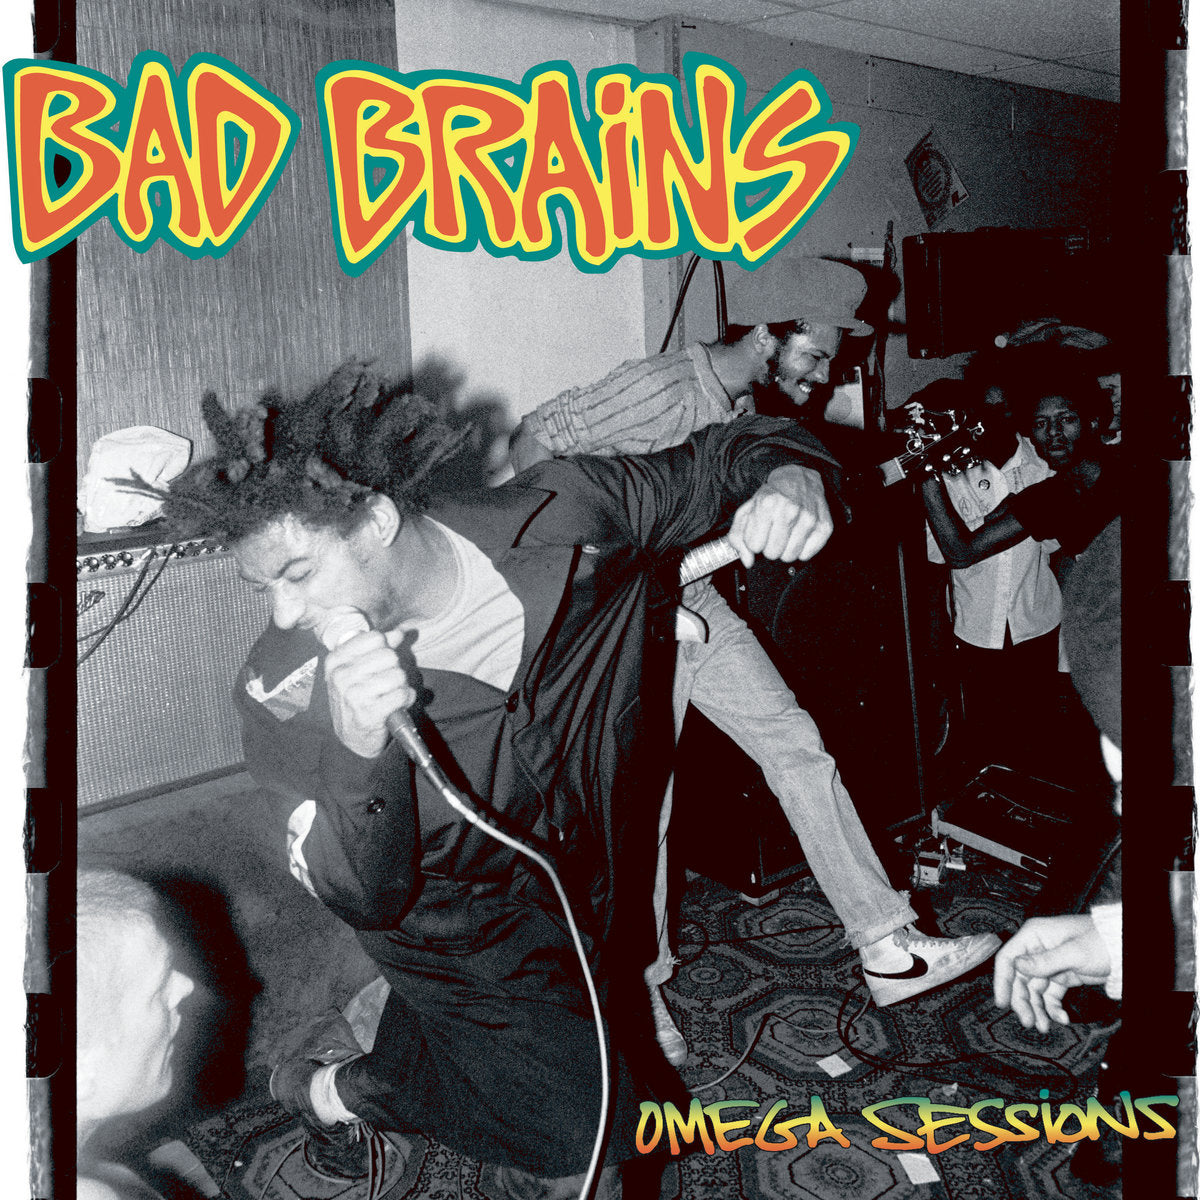 Bad Brains "Omega Sessions" [Red Vinyl]